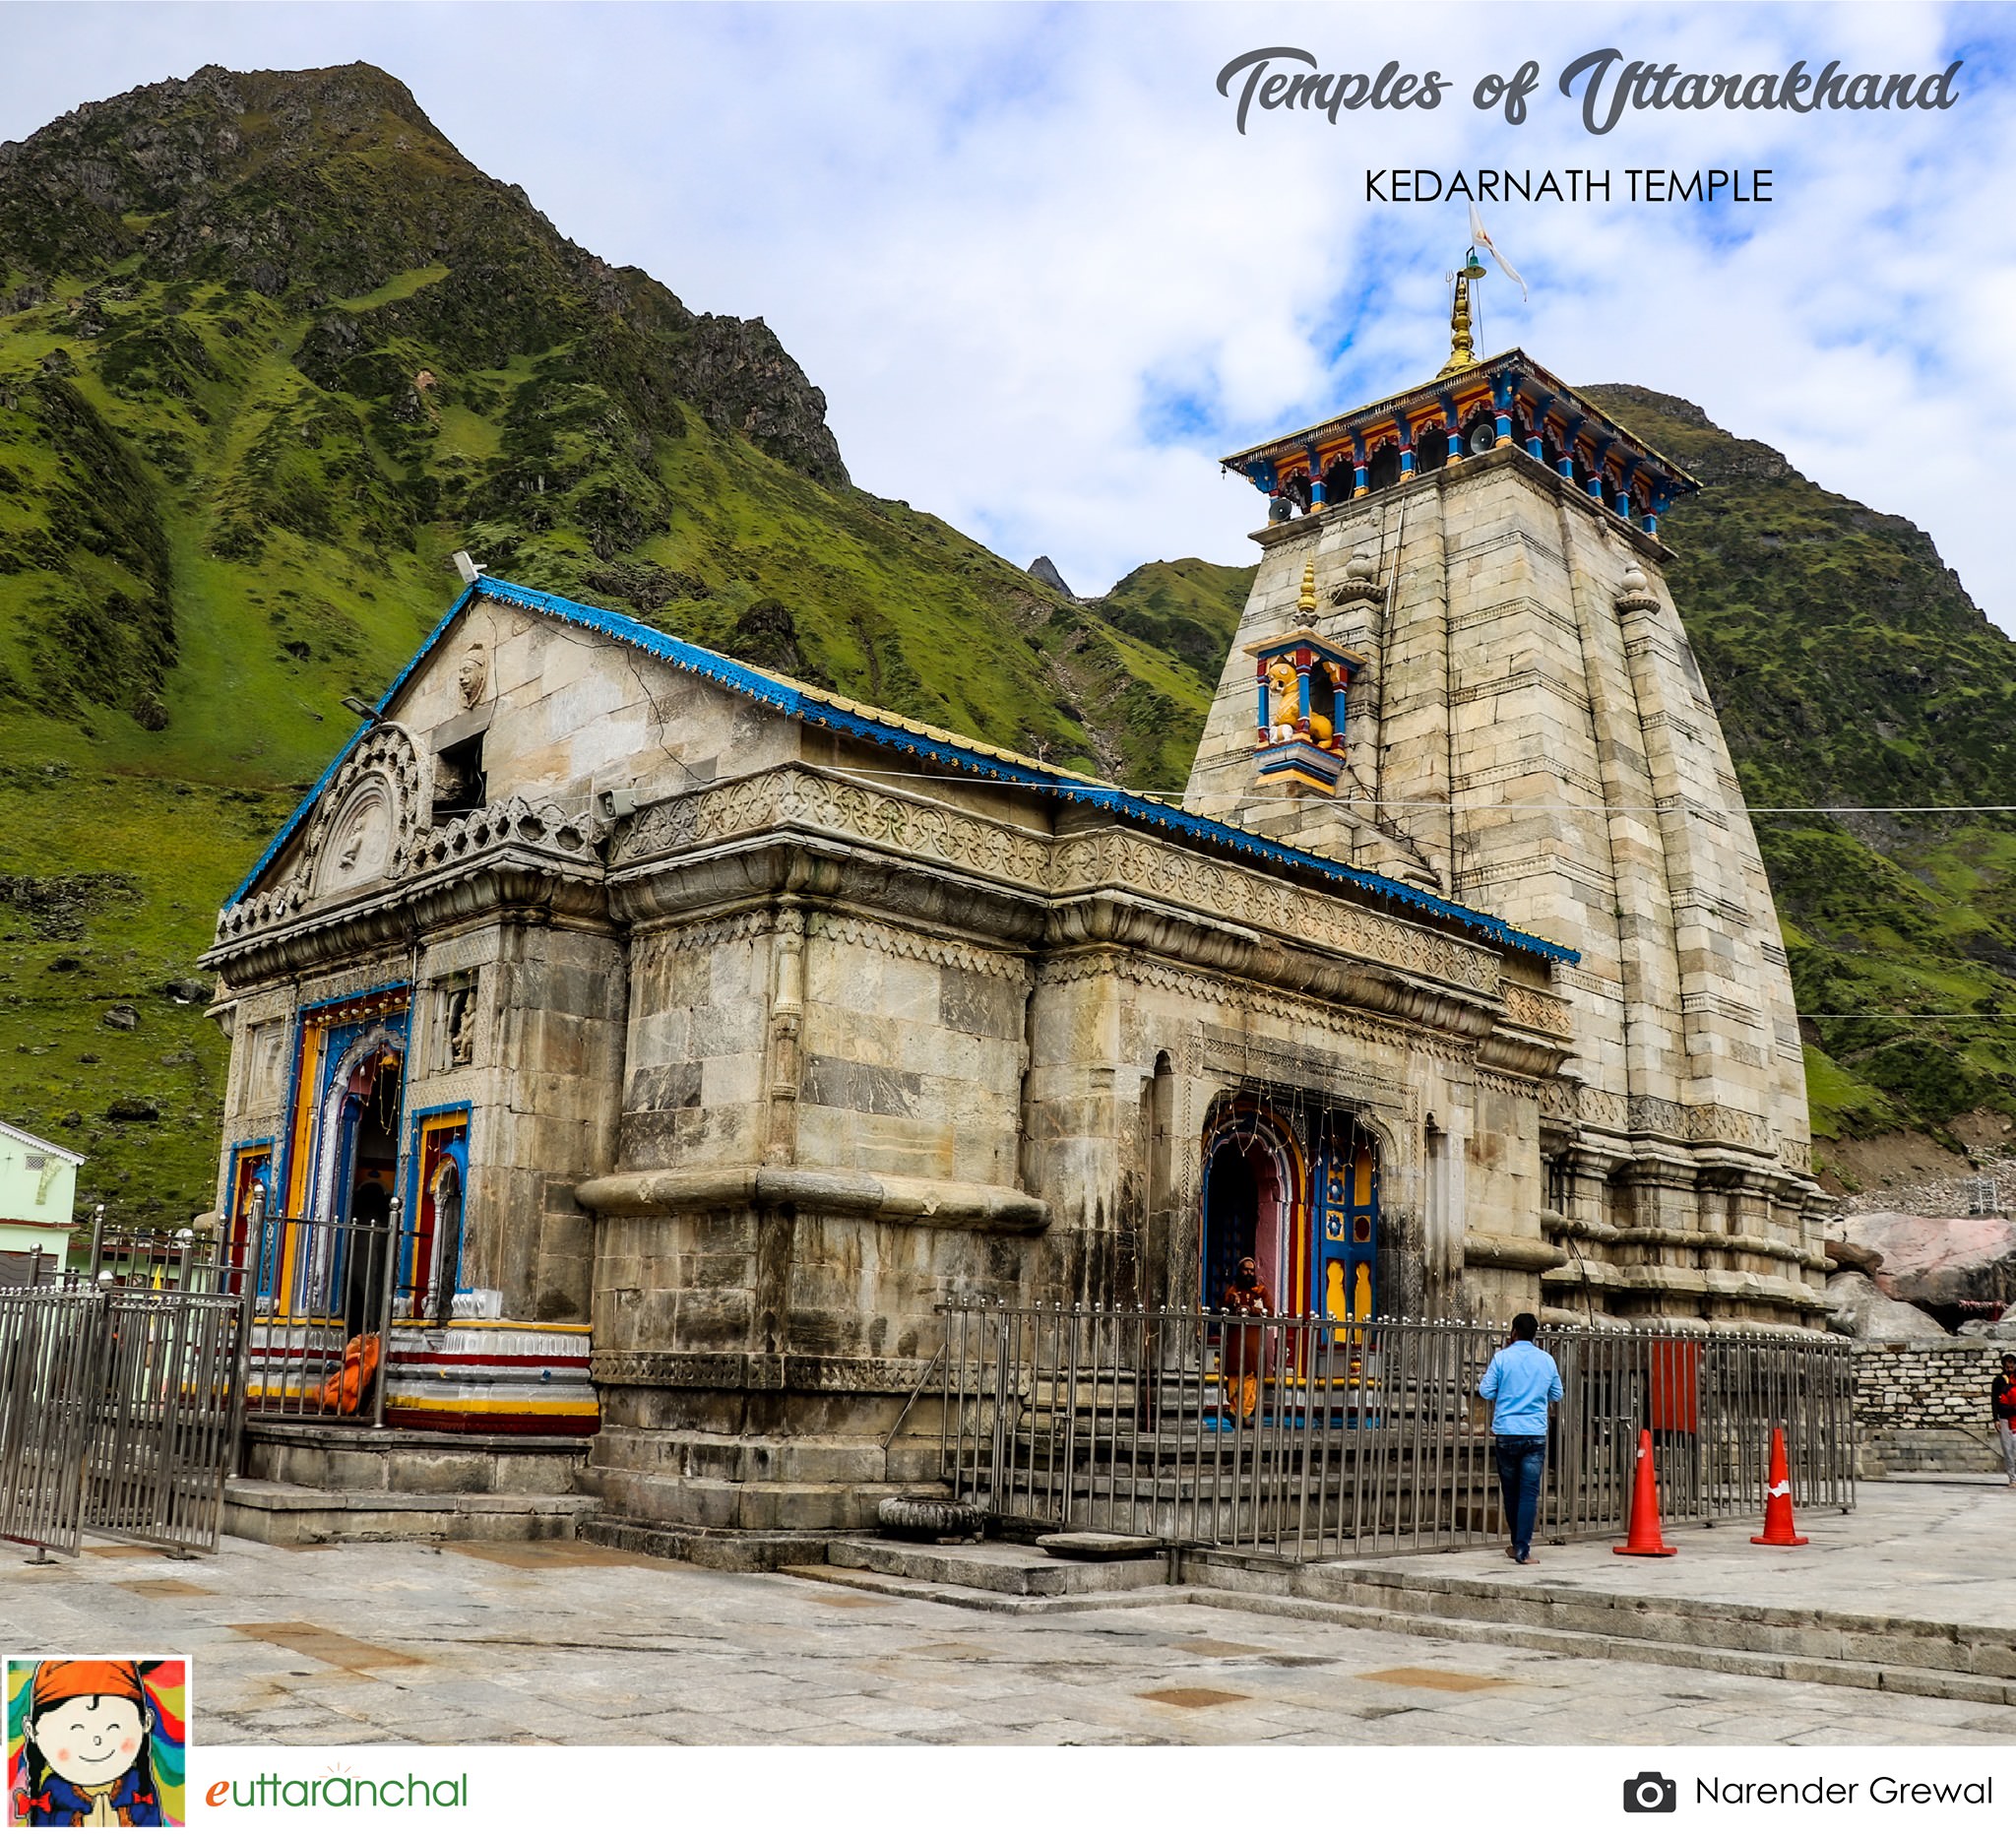 Kedarnath Temple Pictures - Kedarnath Temple Architecture Picture Gallery  Images of Kedarnath Temple